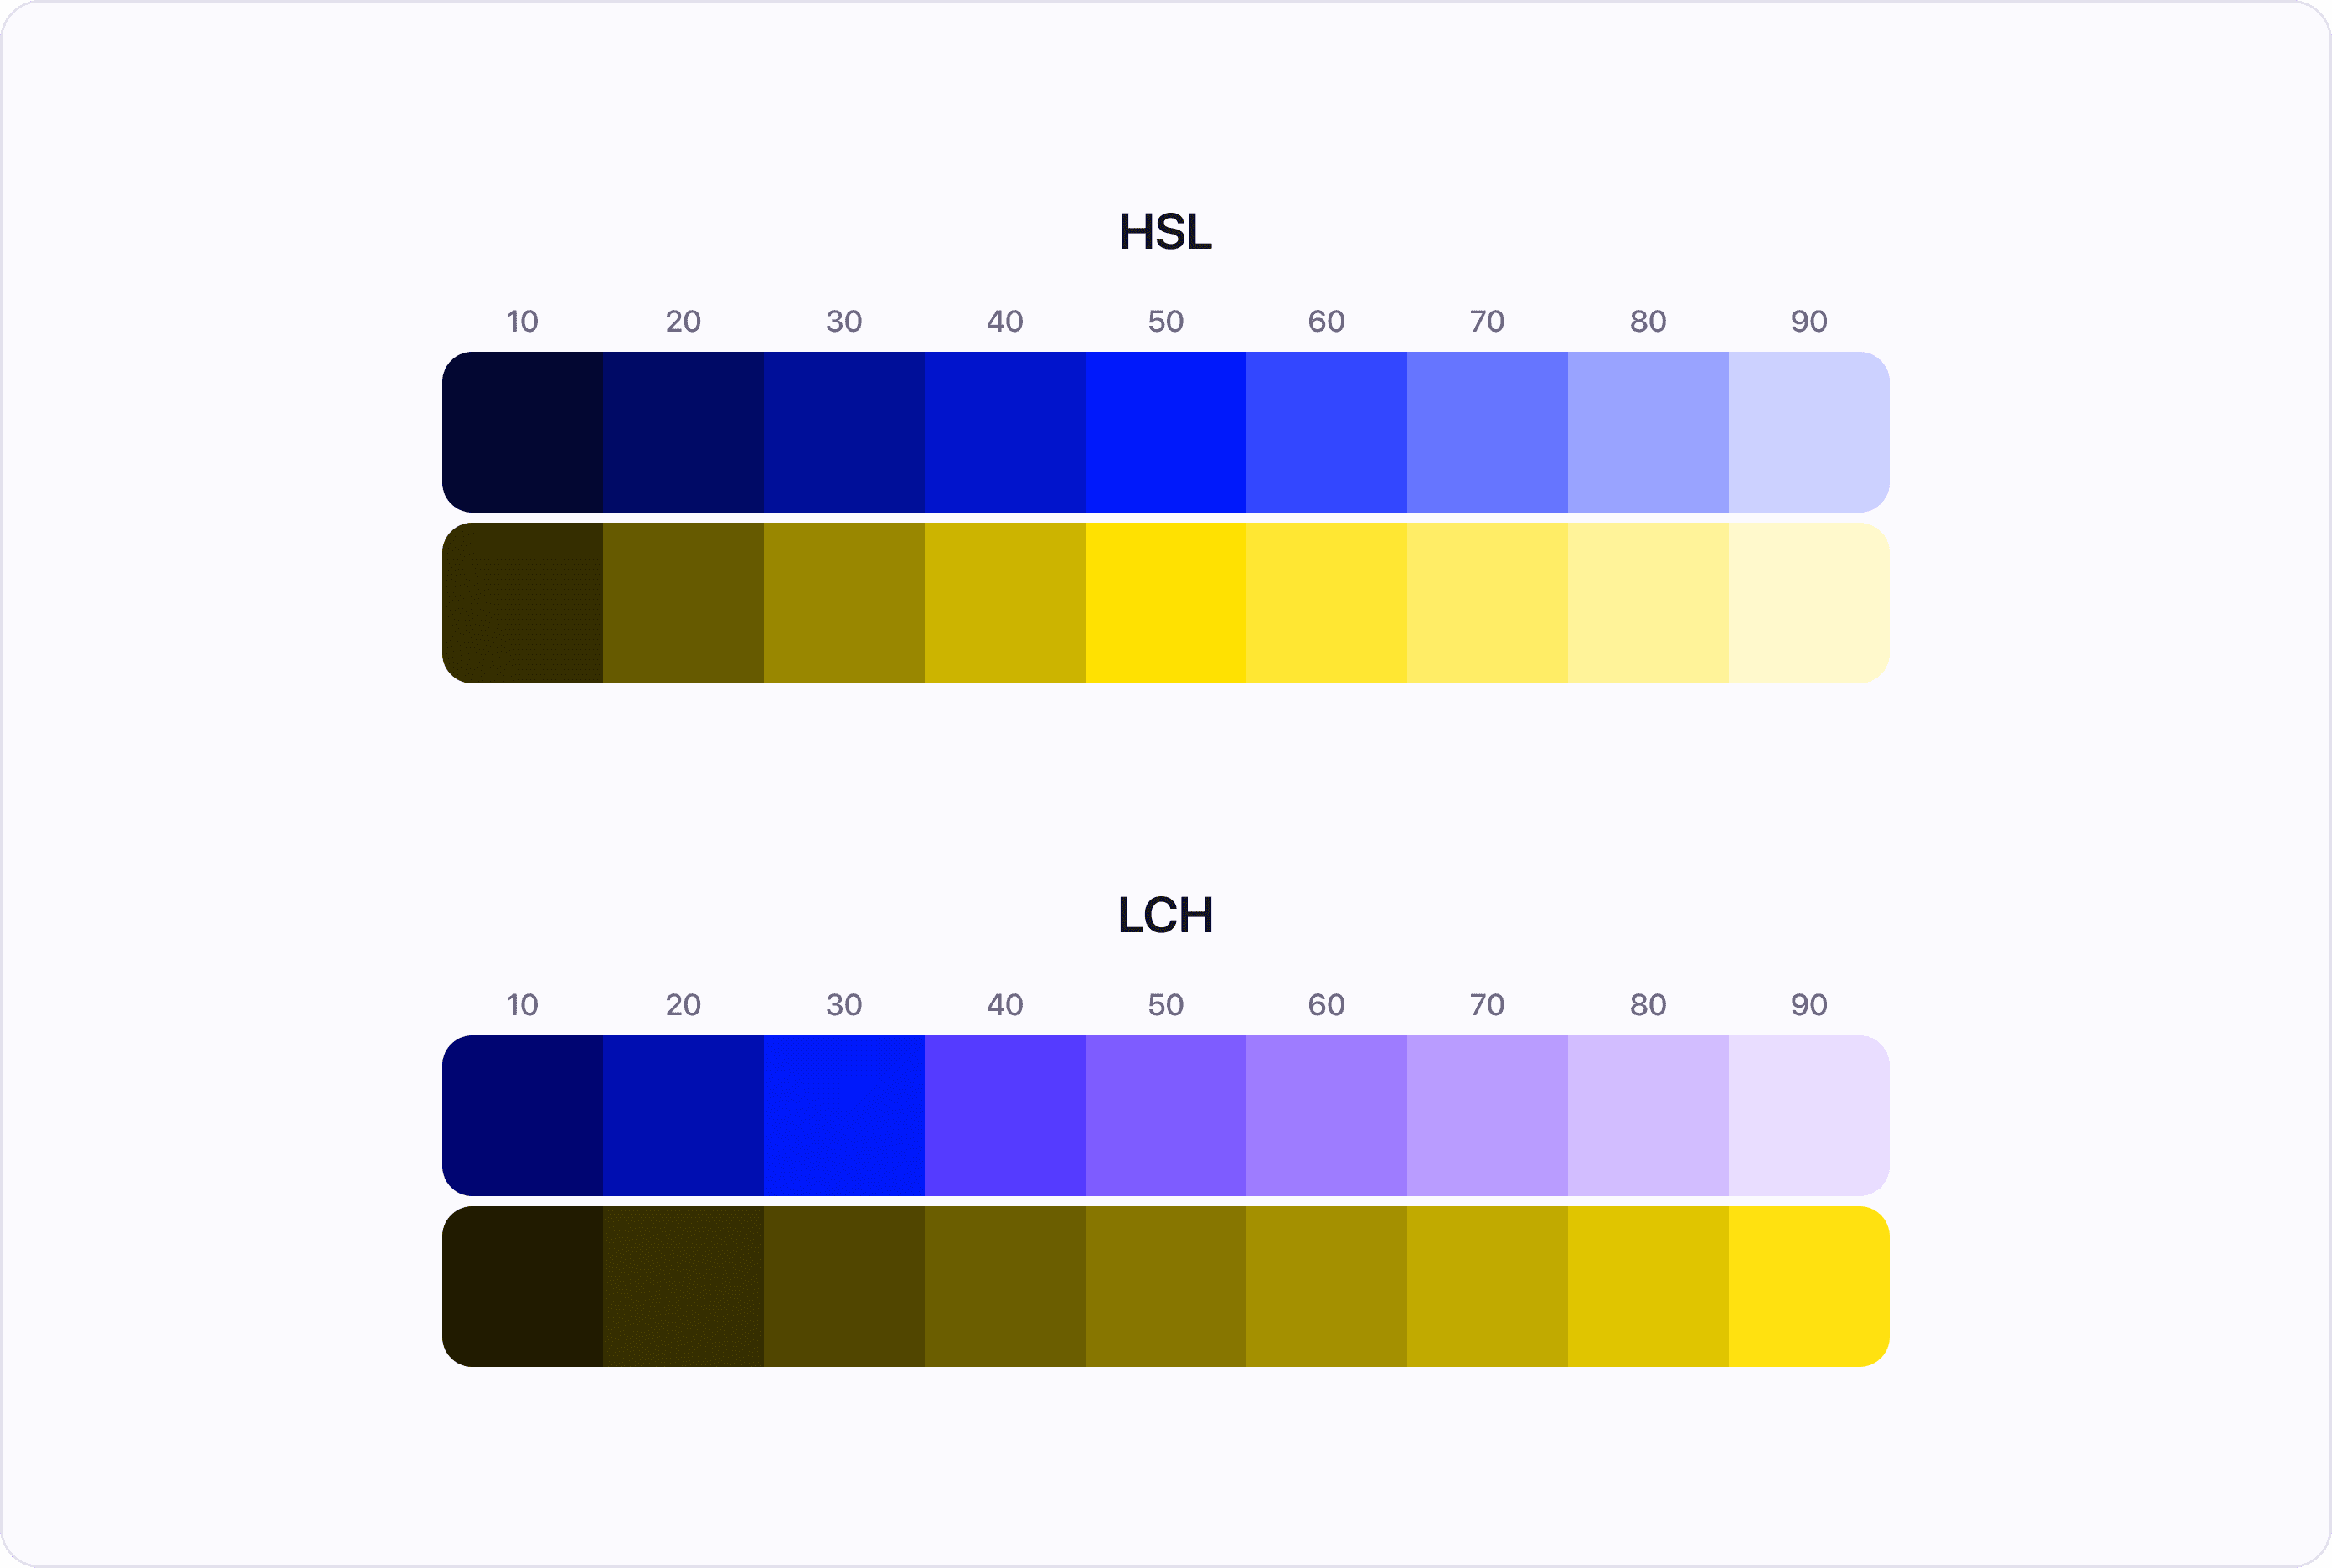 LCH lightness compared to HSL lightness